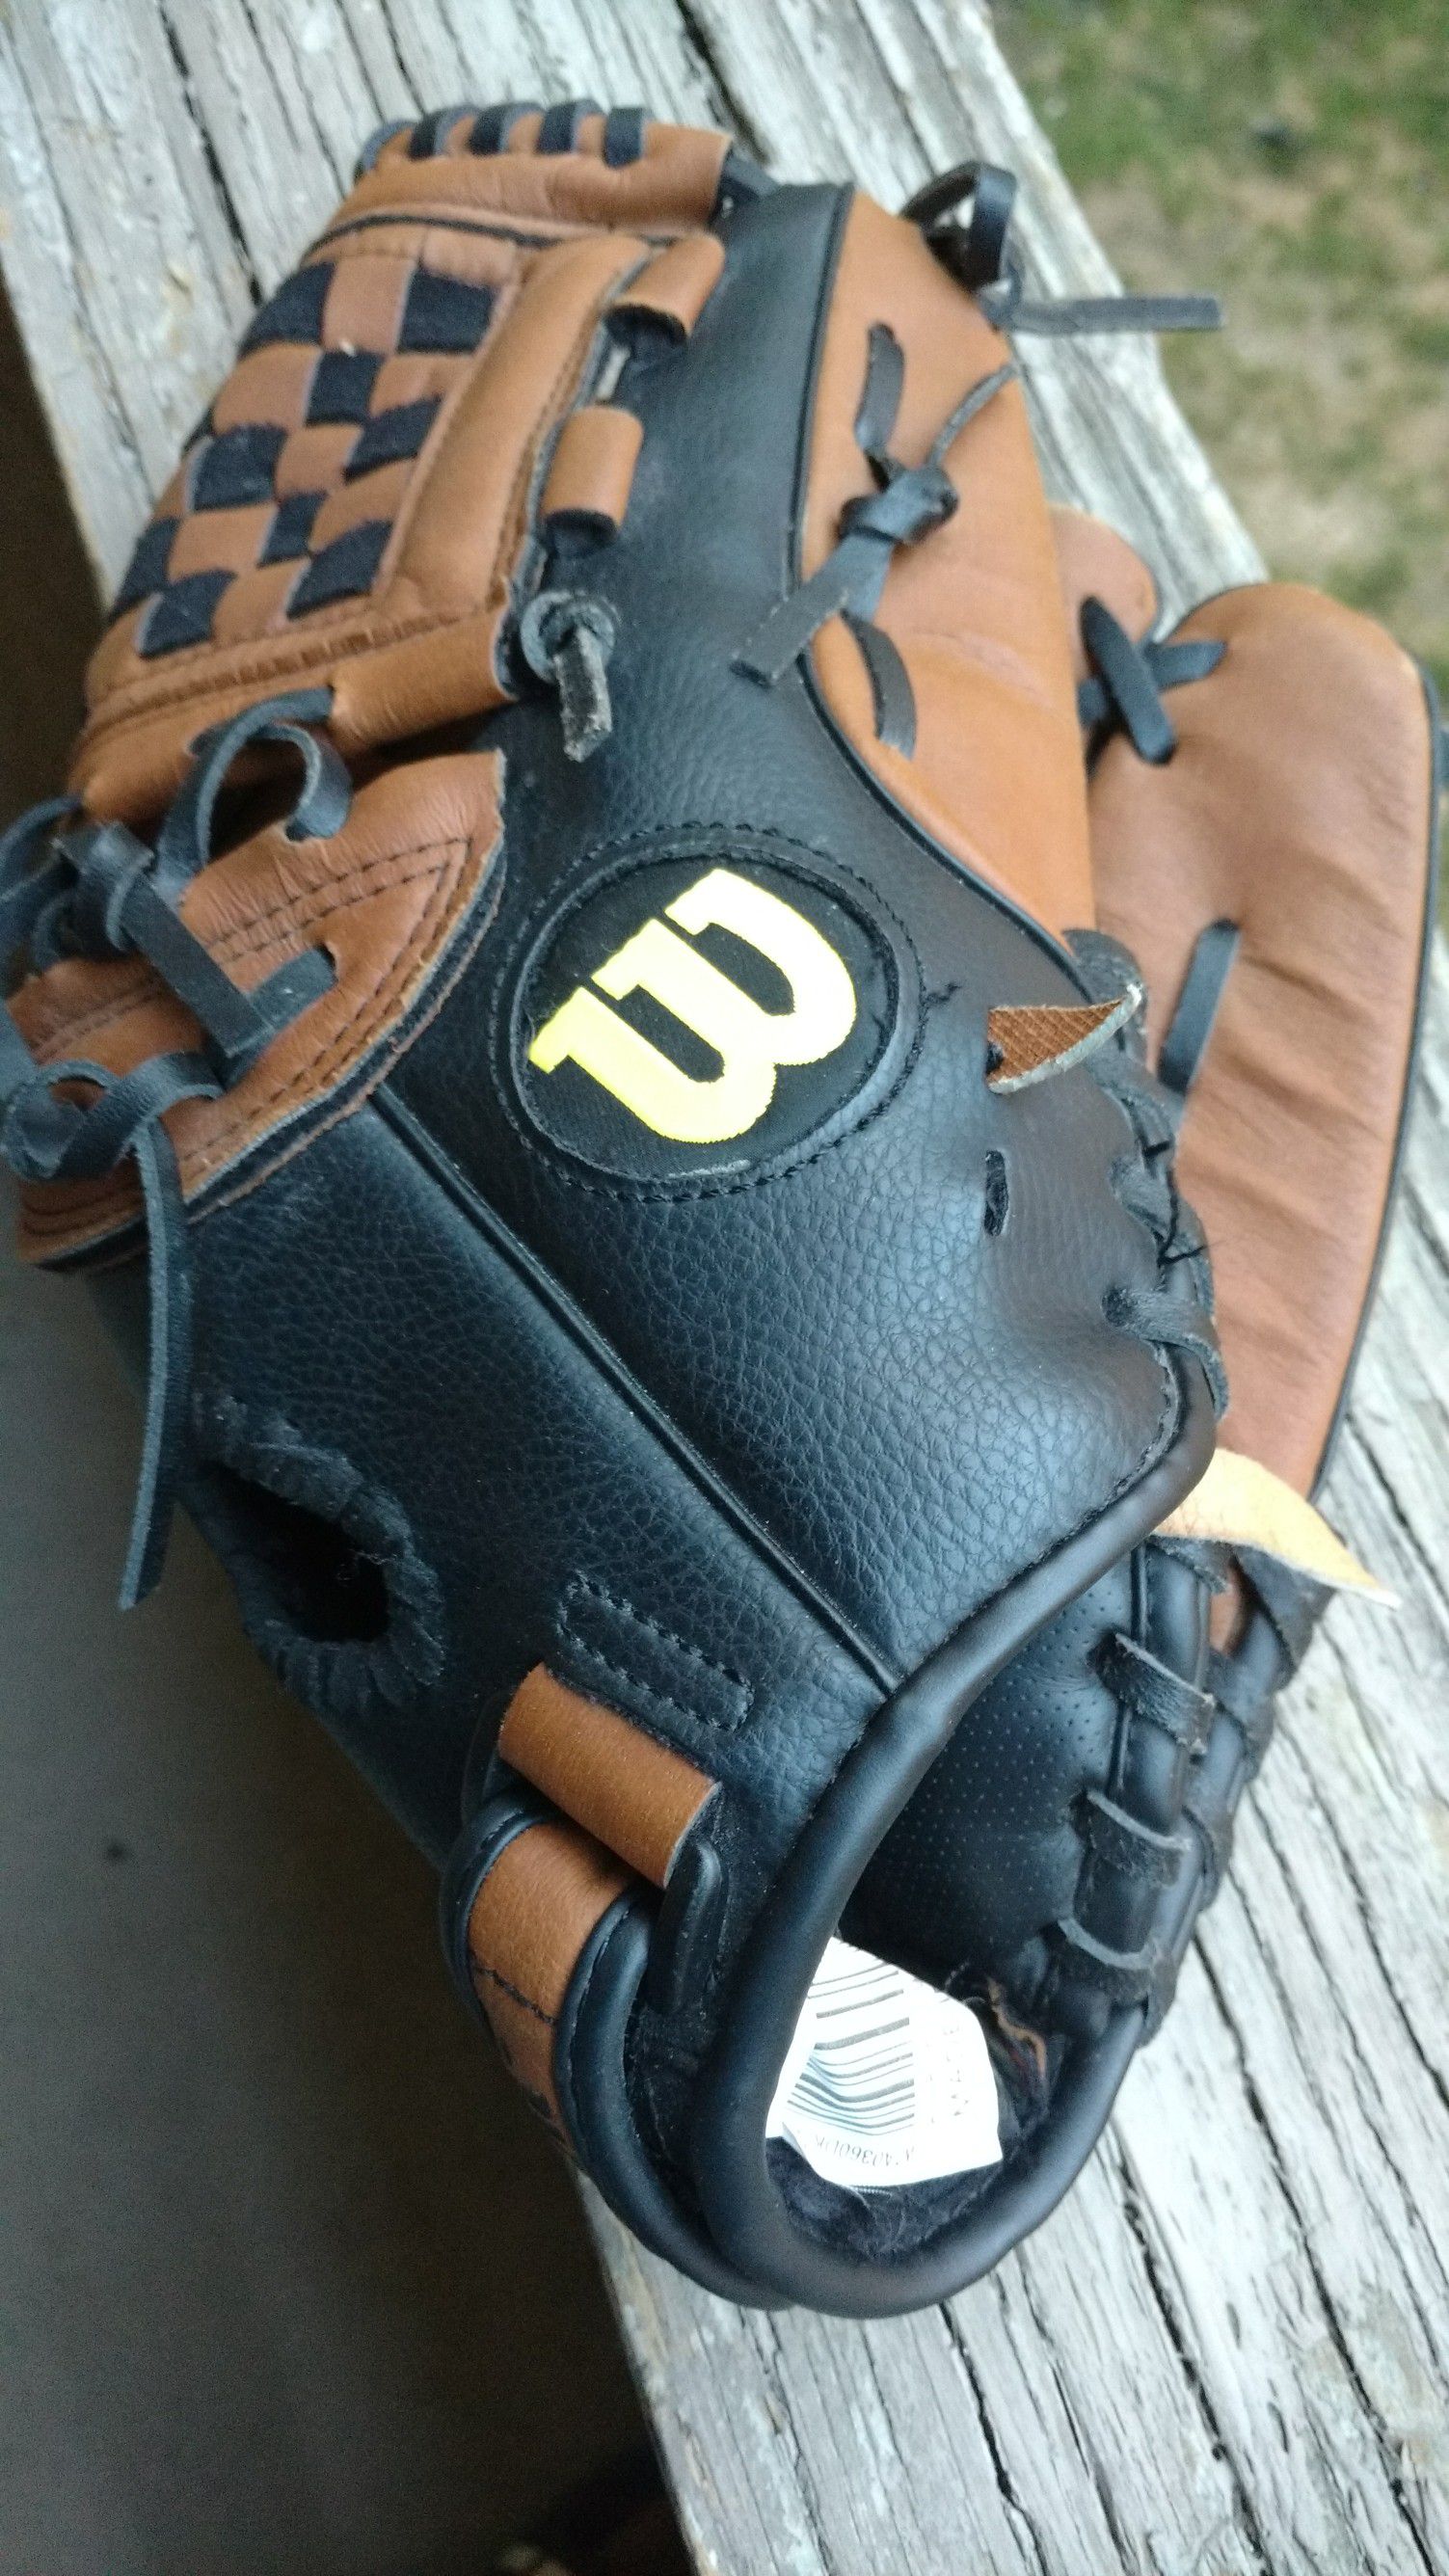 Wilson's elite right-handers fielders baseball glove